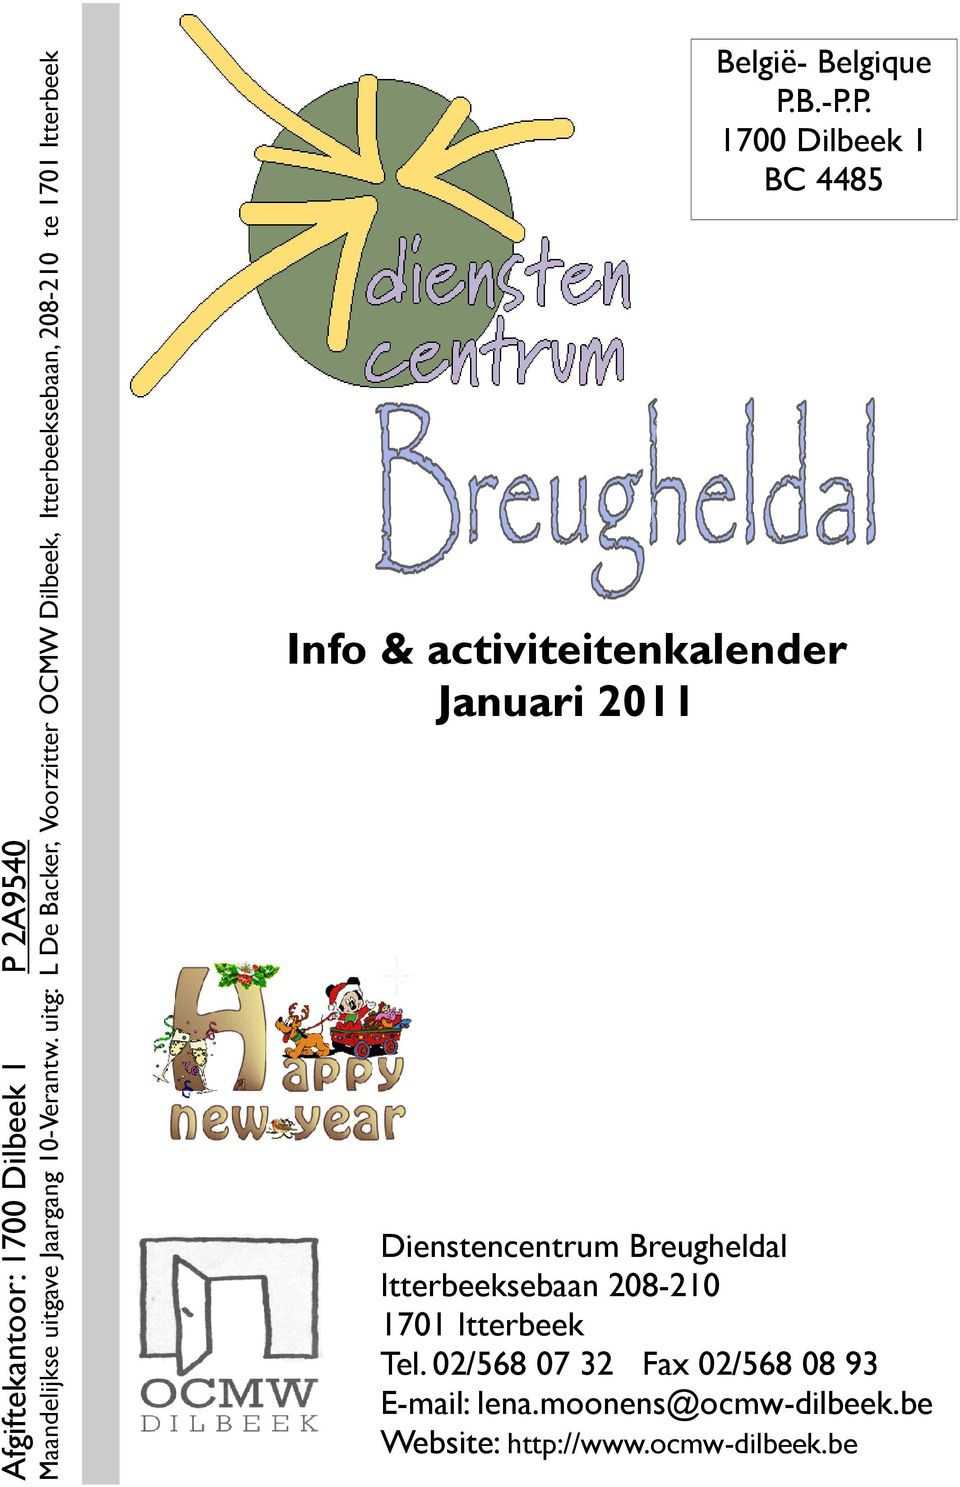 P. 1700 Dilbeek 1 BC 4485 Info & activiteitenkalender Januari 2011 Dienstencentrum Breugheldal